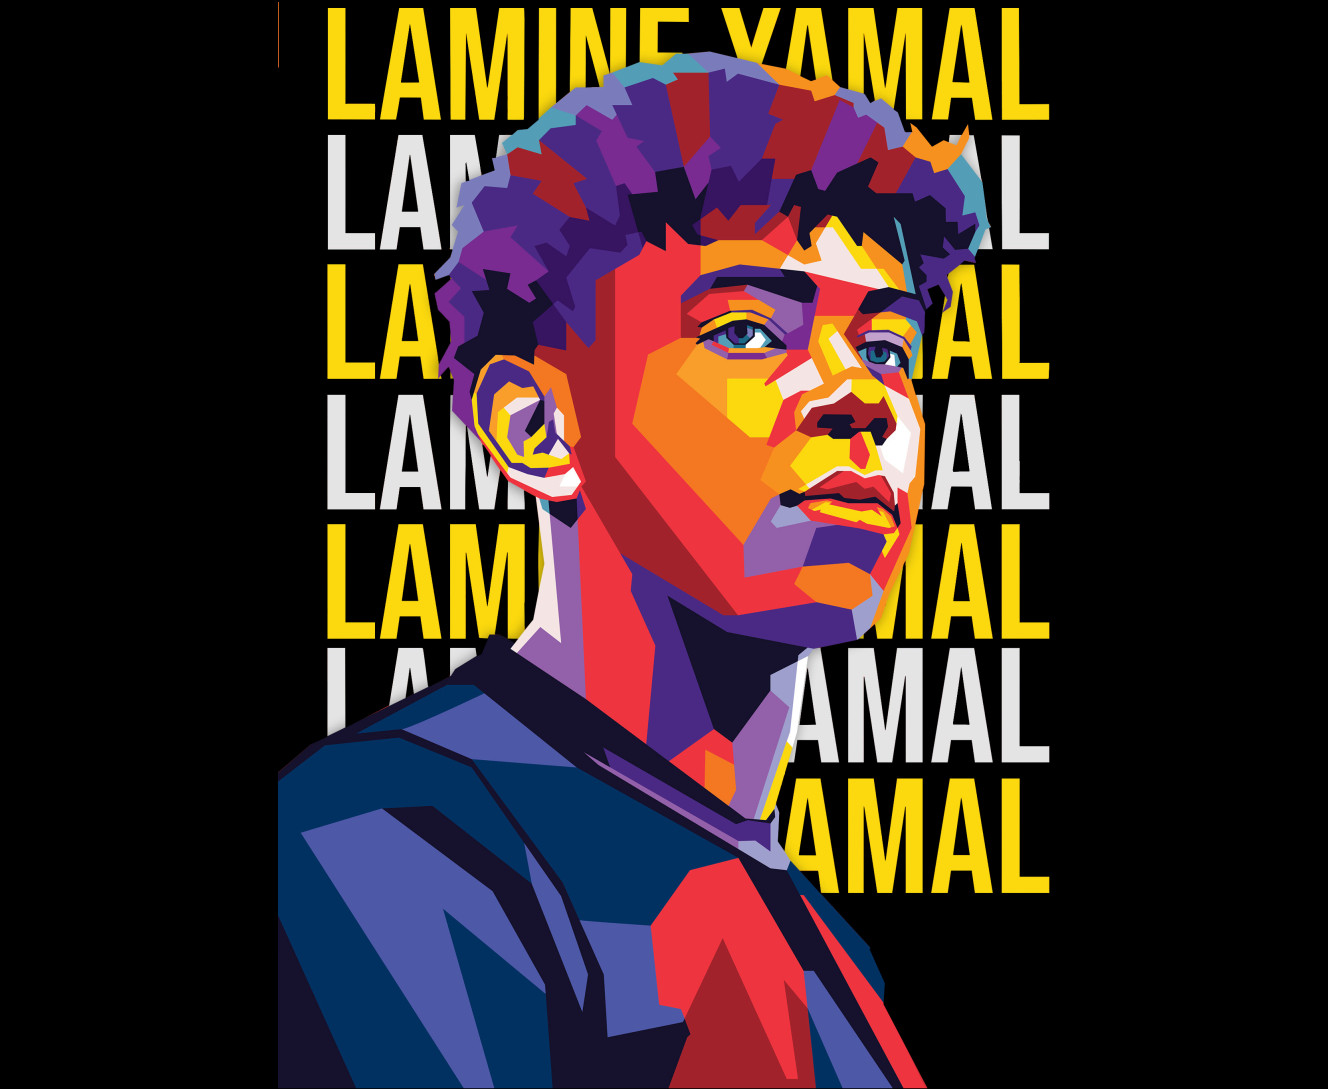 Yamal Lamine